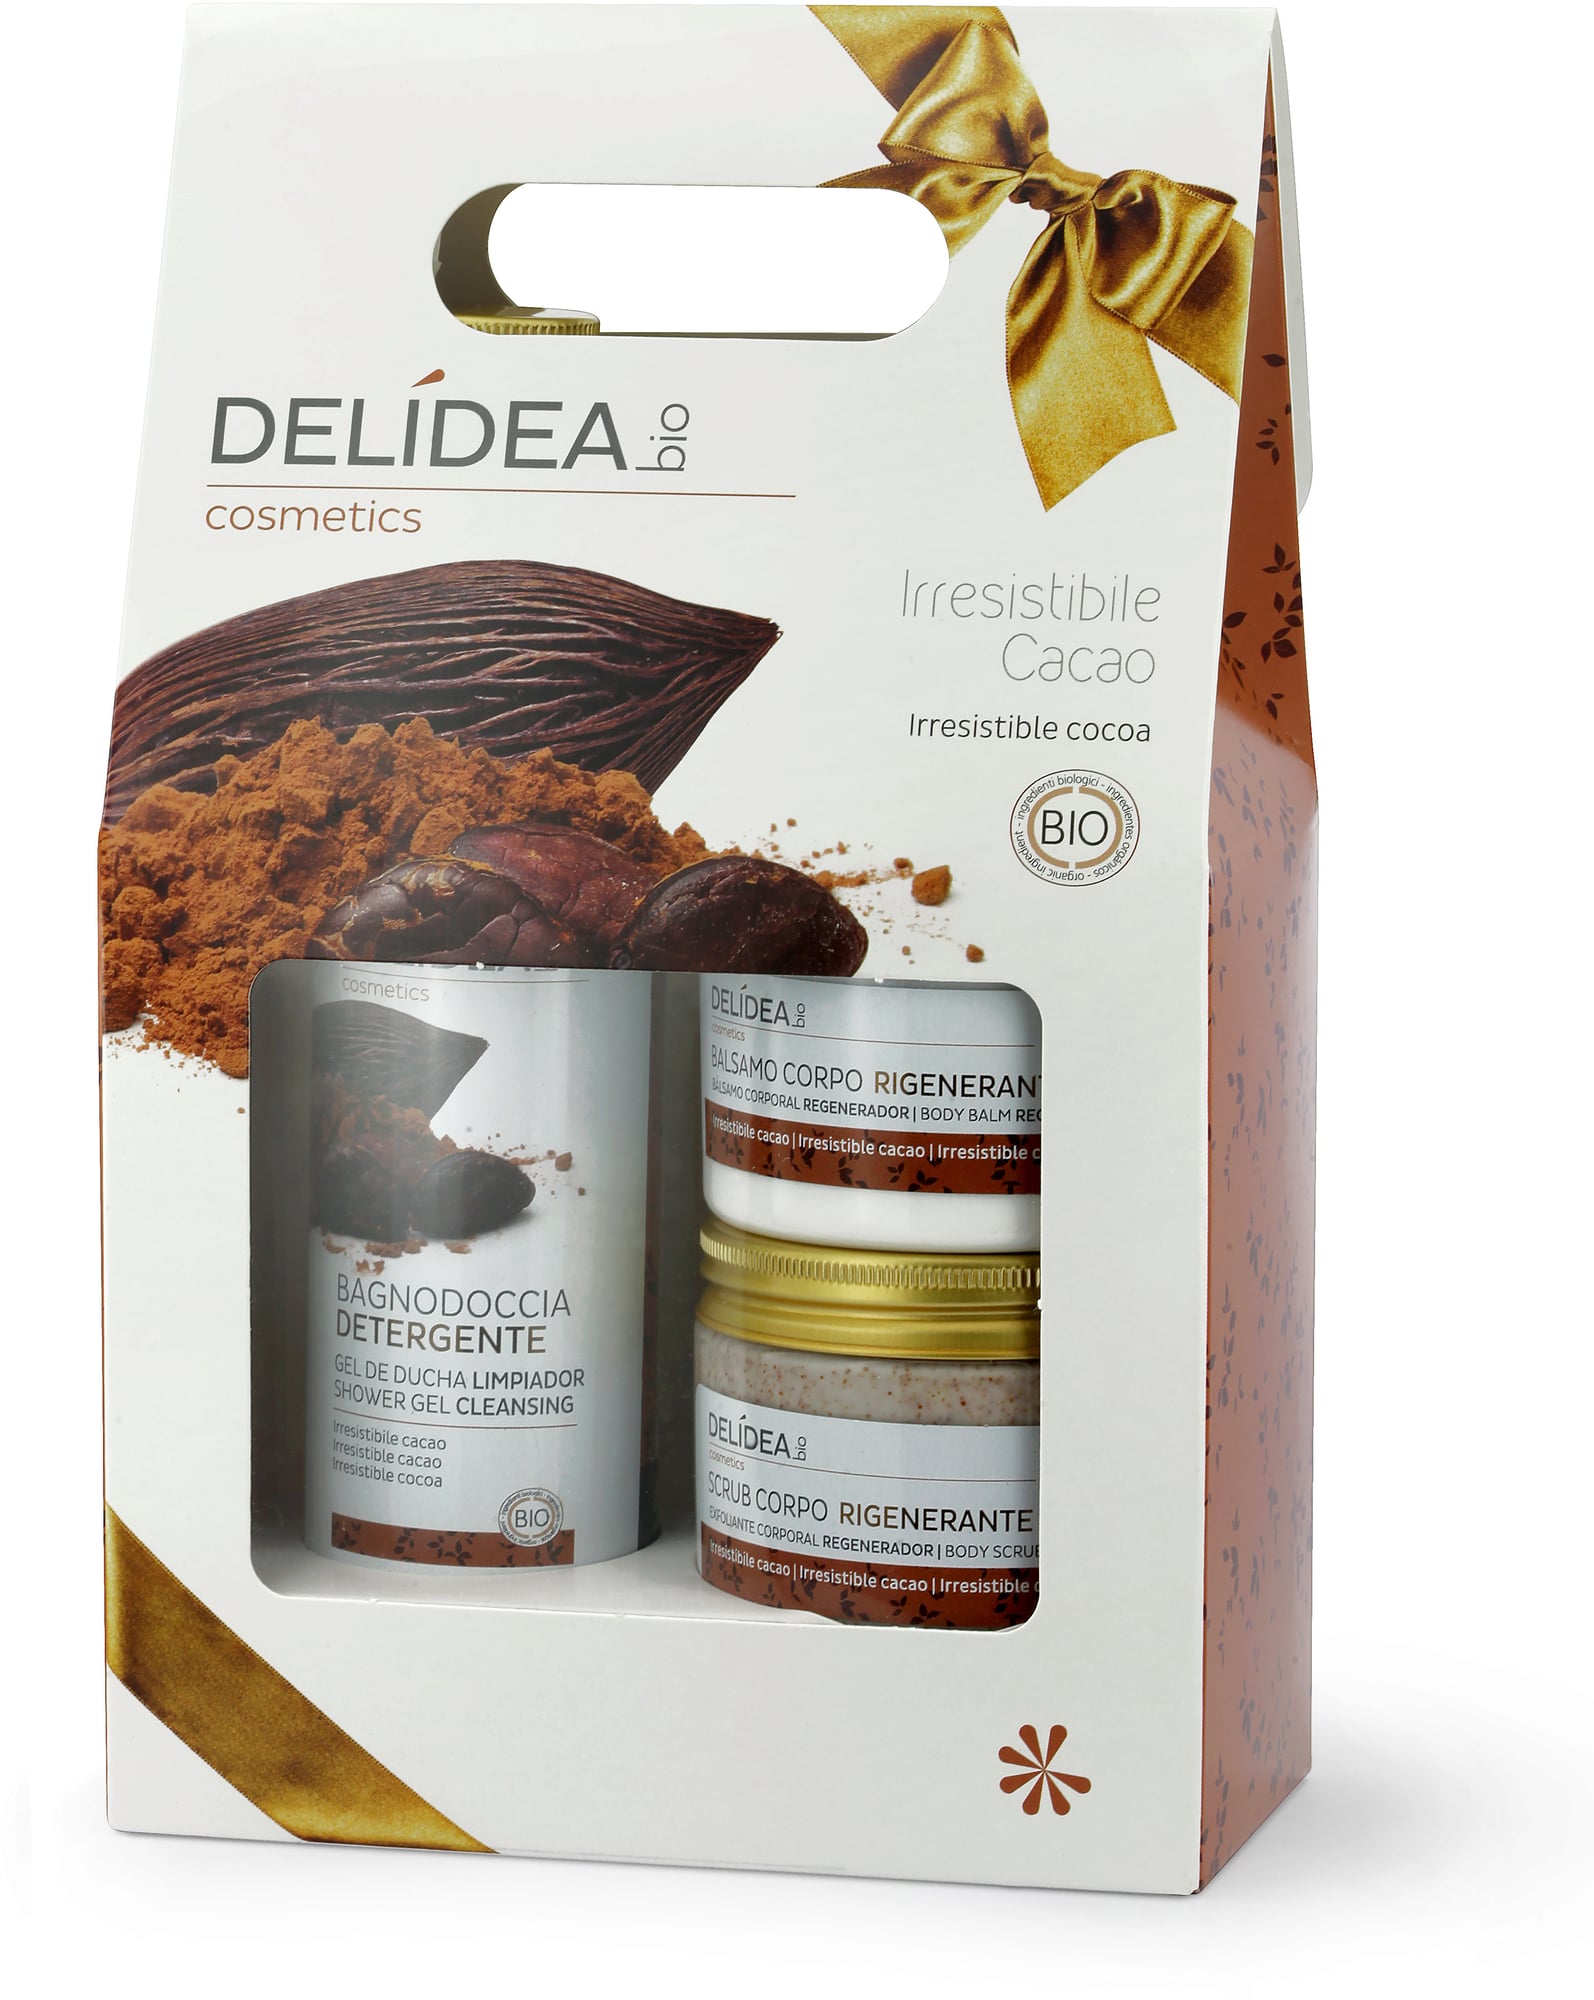 Delidea Naturkosmetik Irresistible Cocoa Gift Box